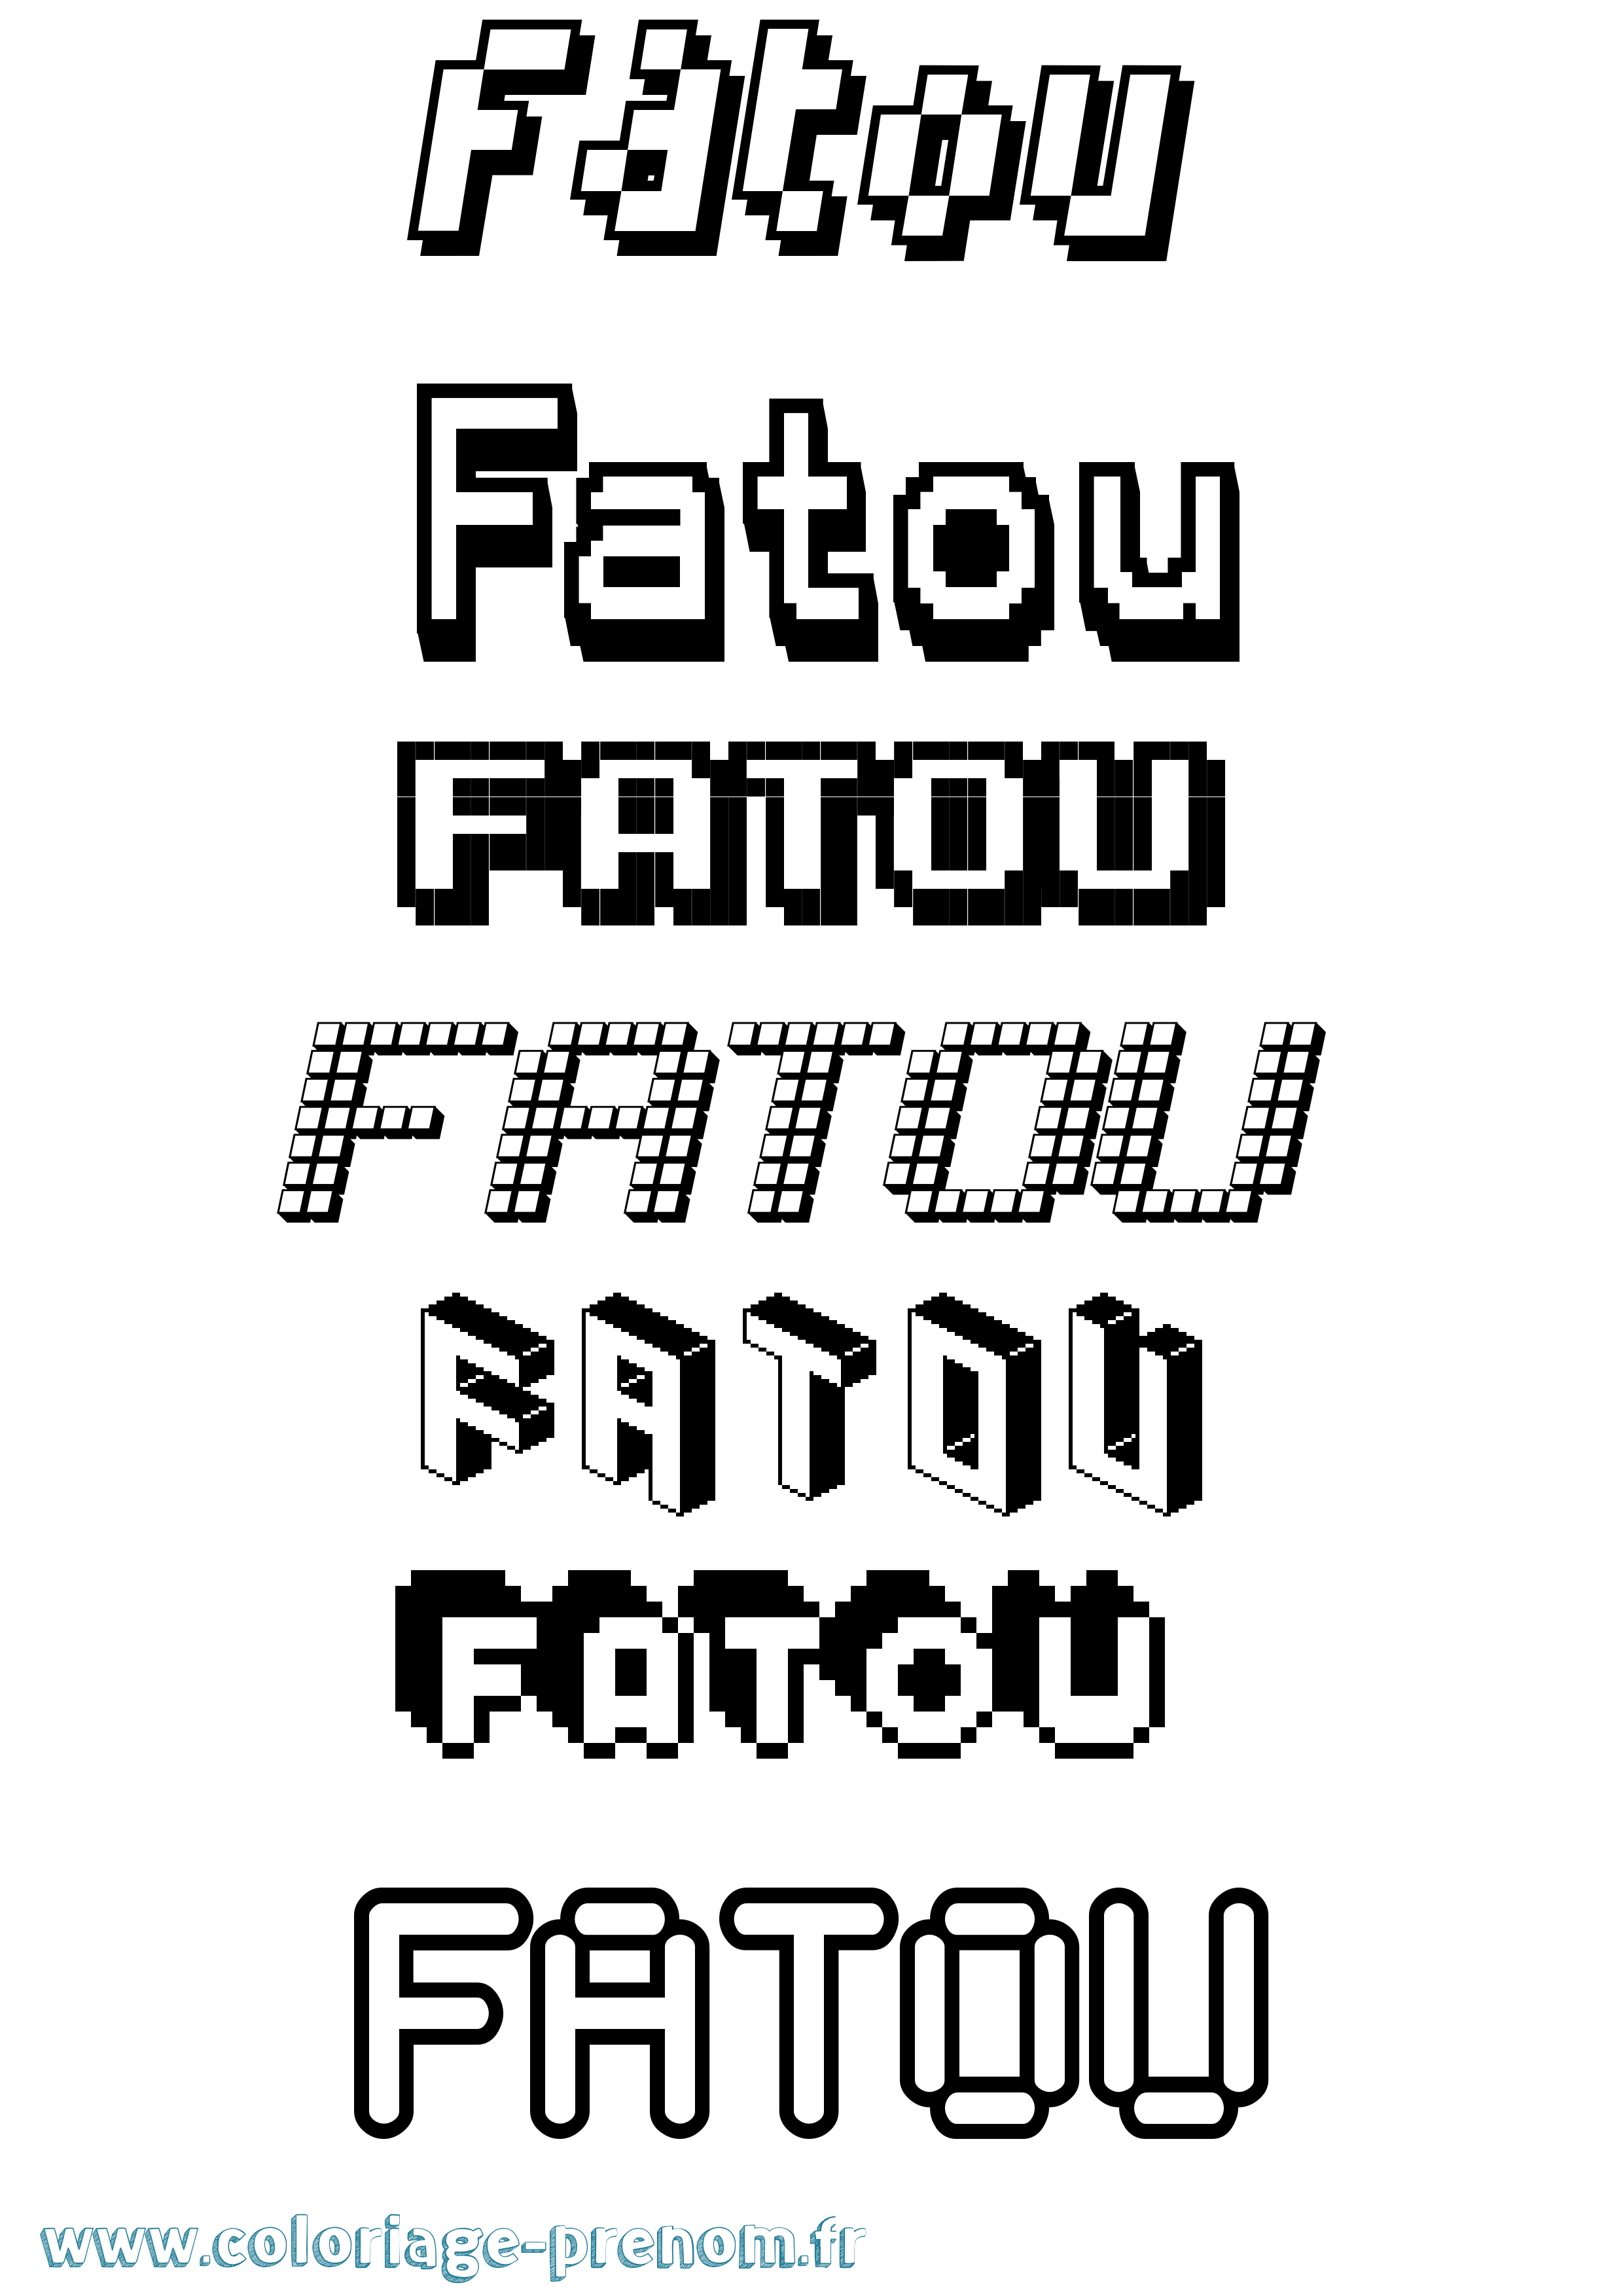 Coloriage prénom Fatou Pixel